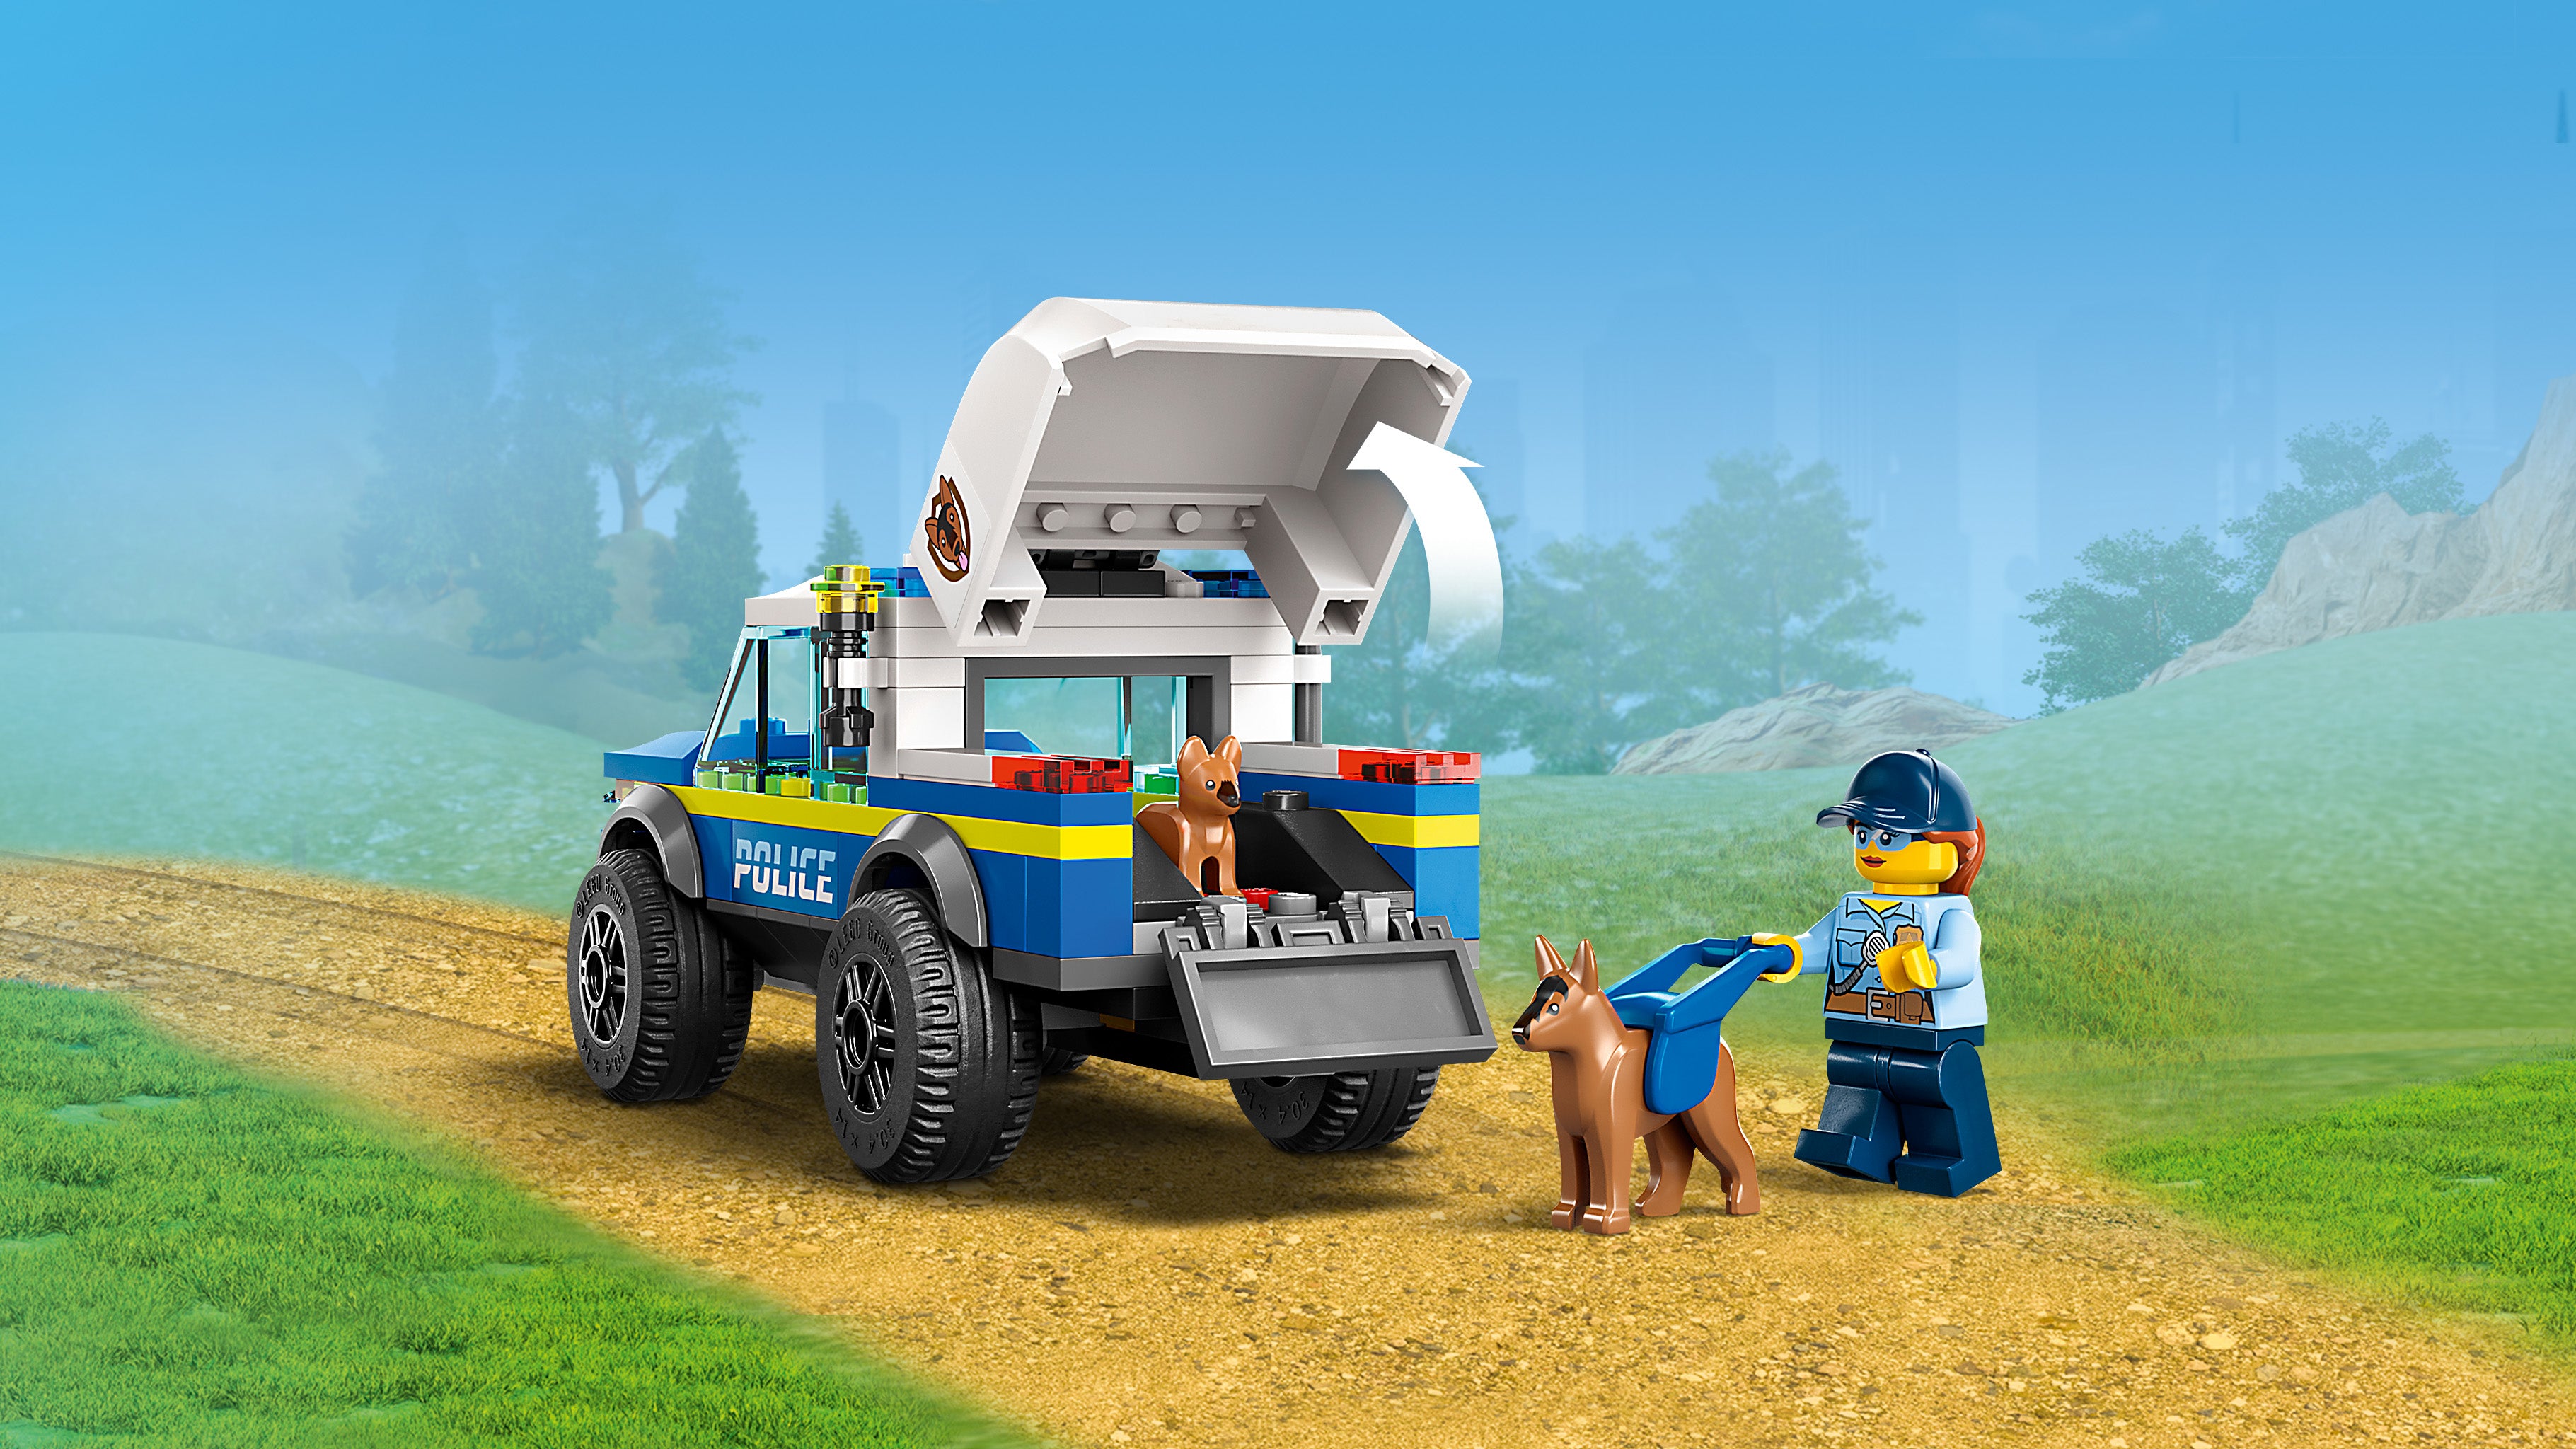 LEGO City Mobile Police Dog Training Set with Toy Car 60369